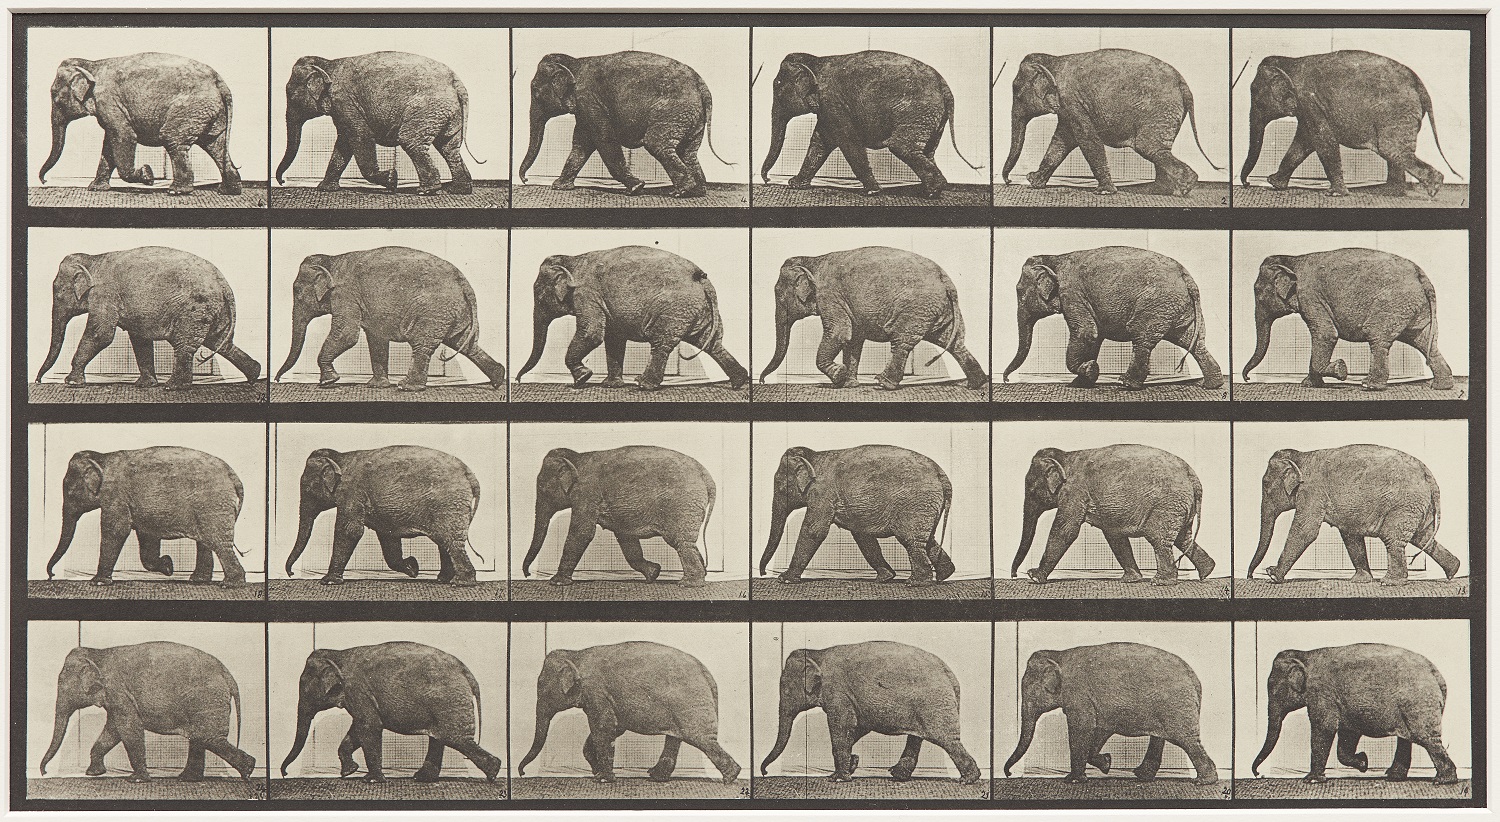 A series of photos of an elephant